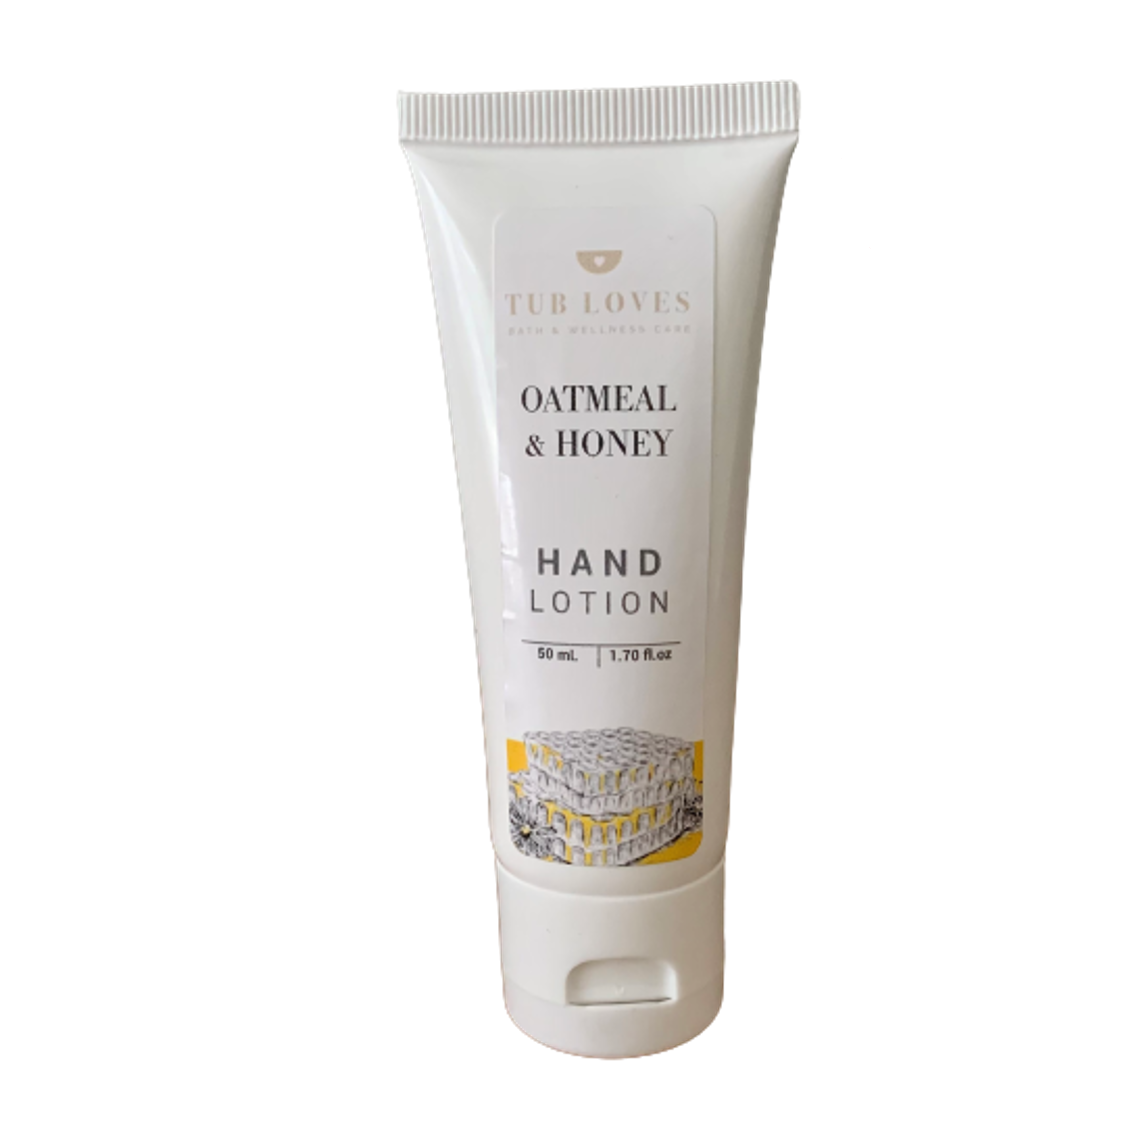 Oatmeal and Honey - Hand Lotion